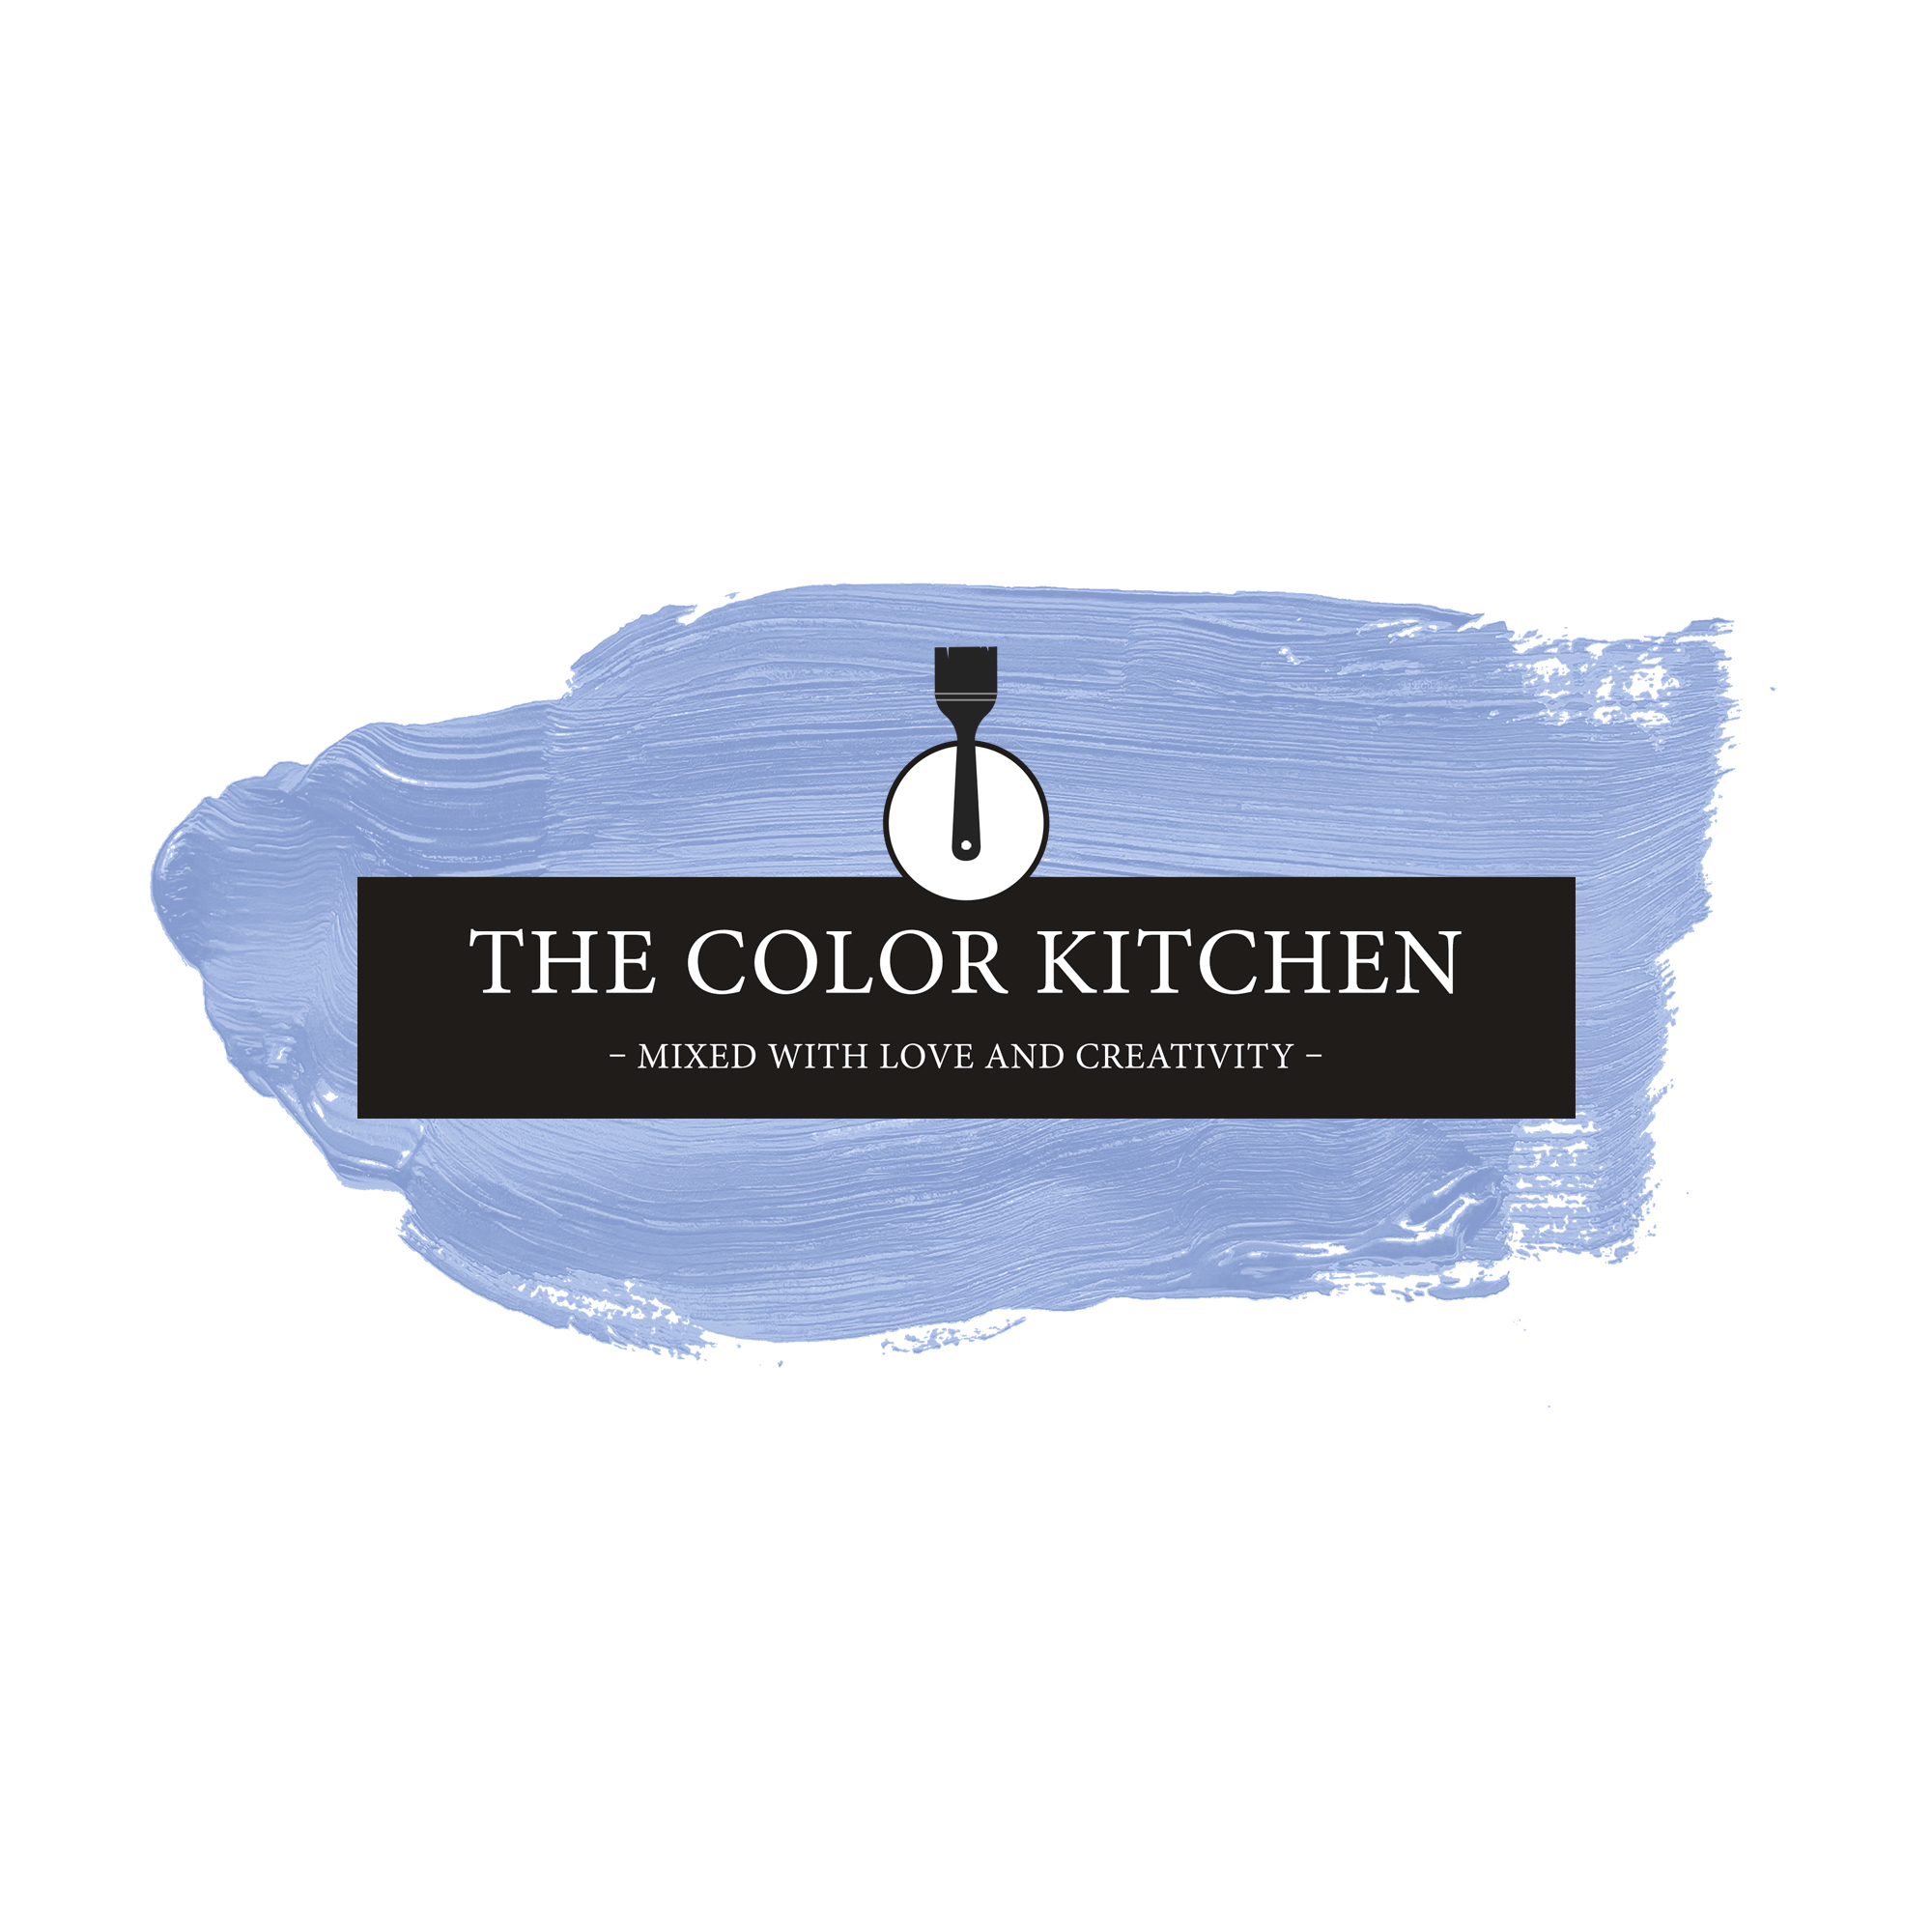 The Color Kitchen Cake Pop 5 l